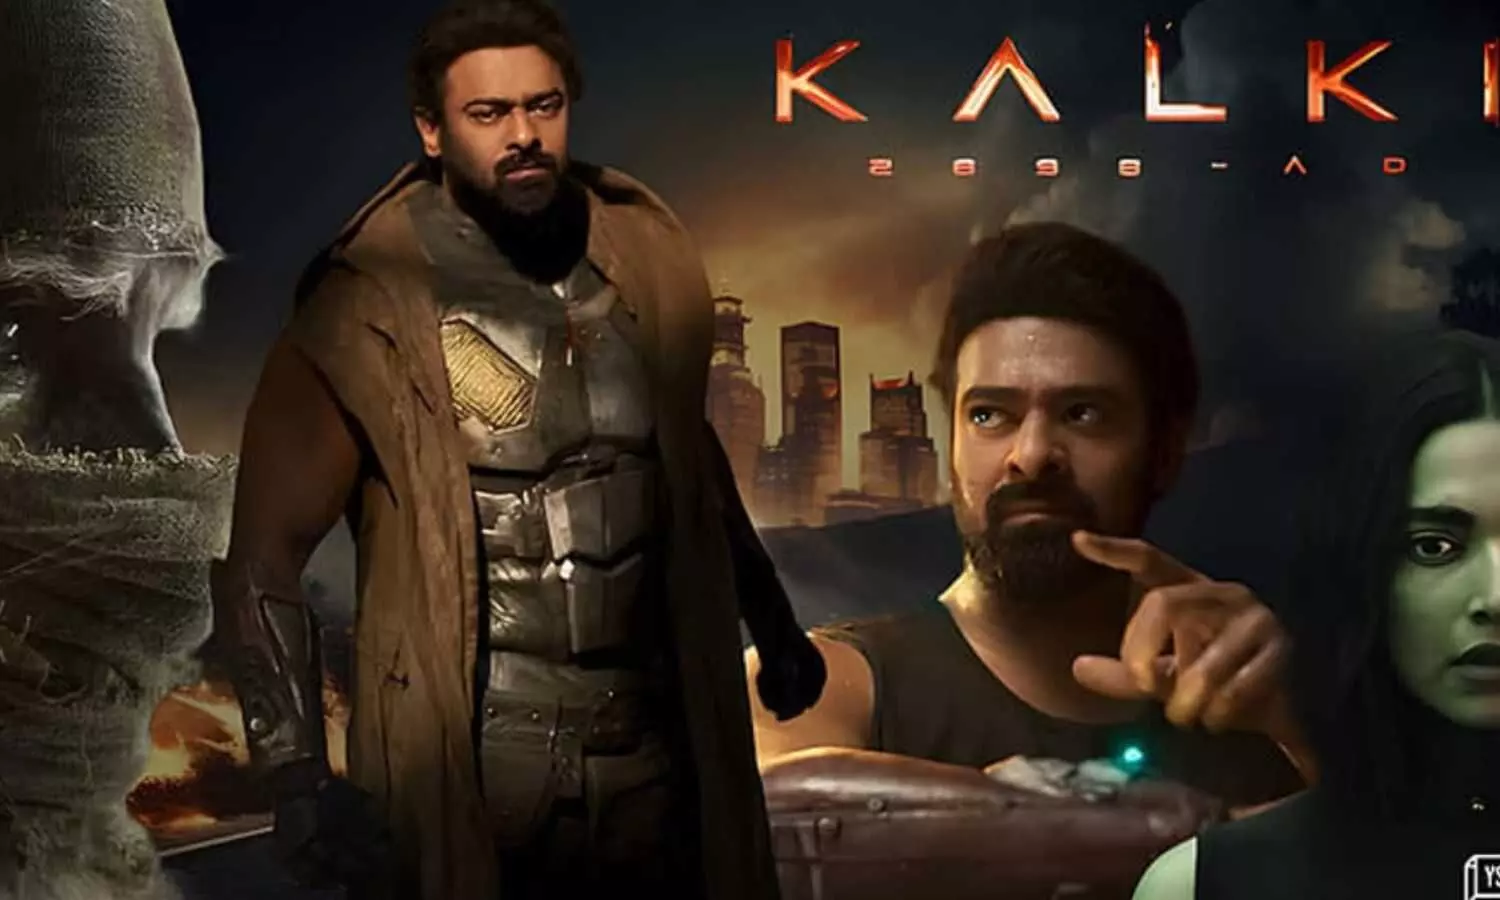 Kalki 2898 AD: Prabhas’ next big film trailer release date announced